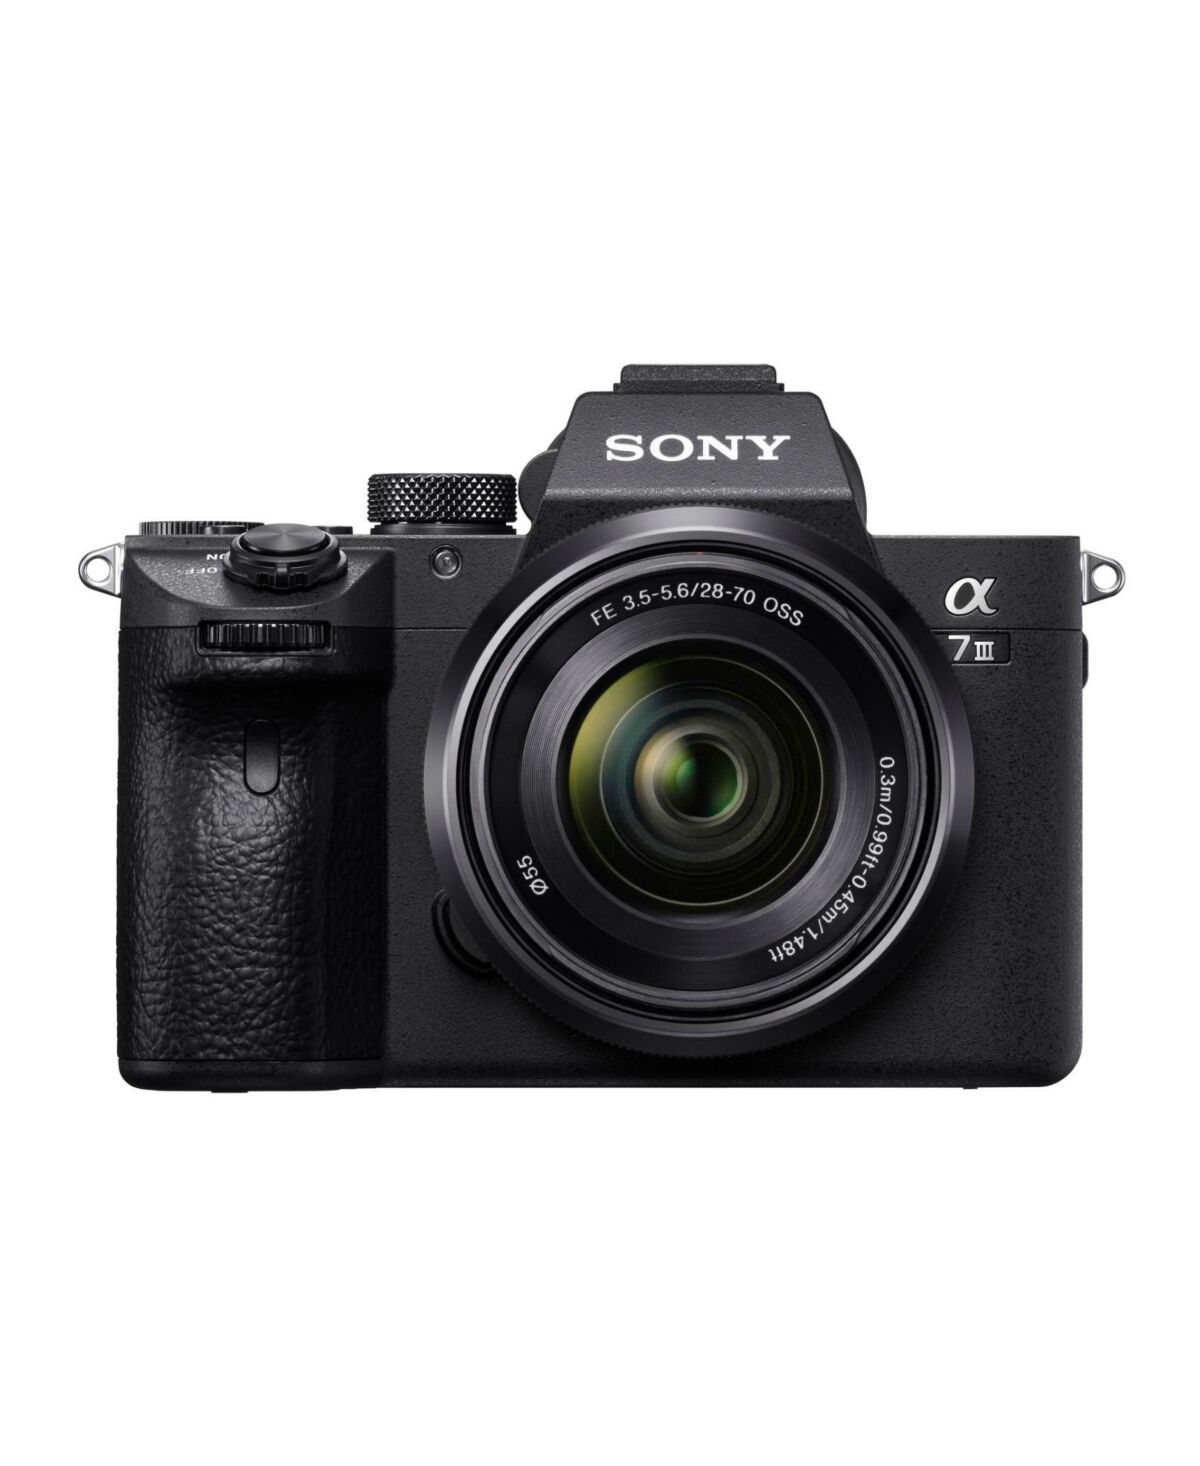 Sony Alpha a7 Iii 24.2MP Full Frame Mirrorless Digital Camera with 28-70mm Lens - Black